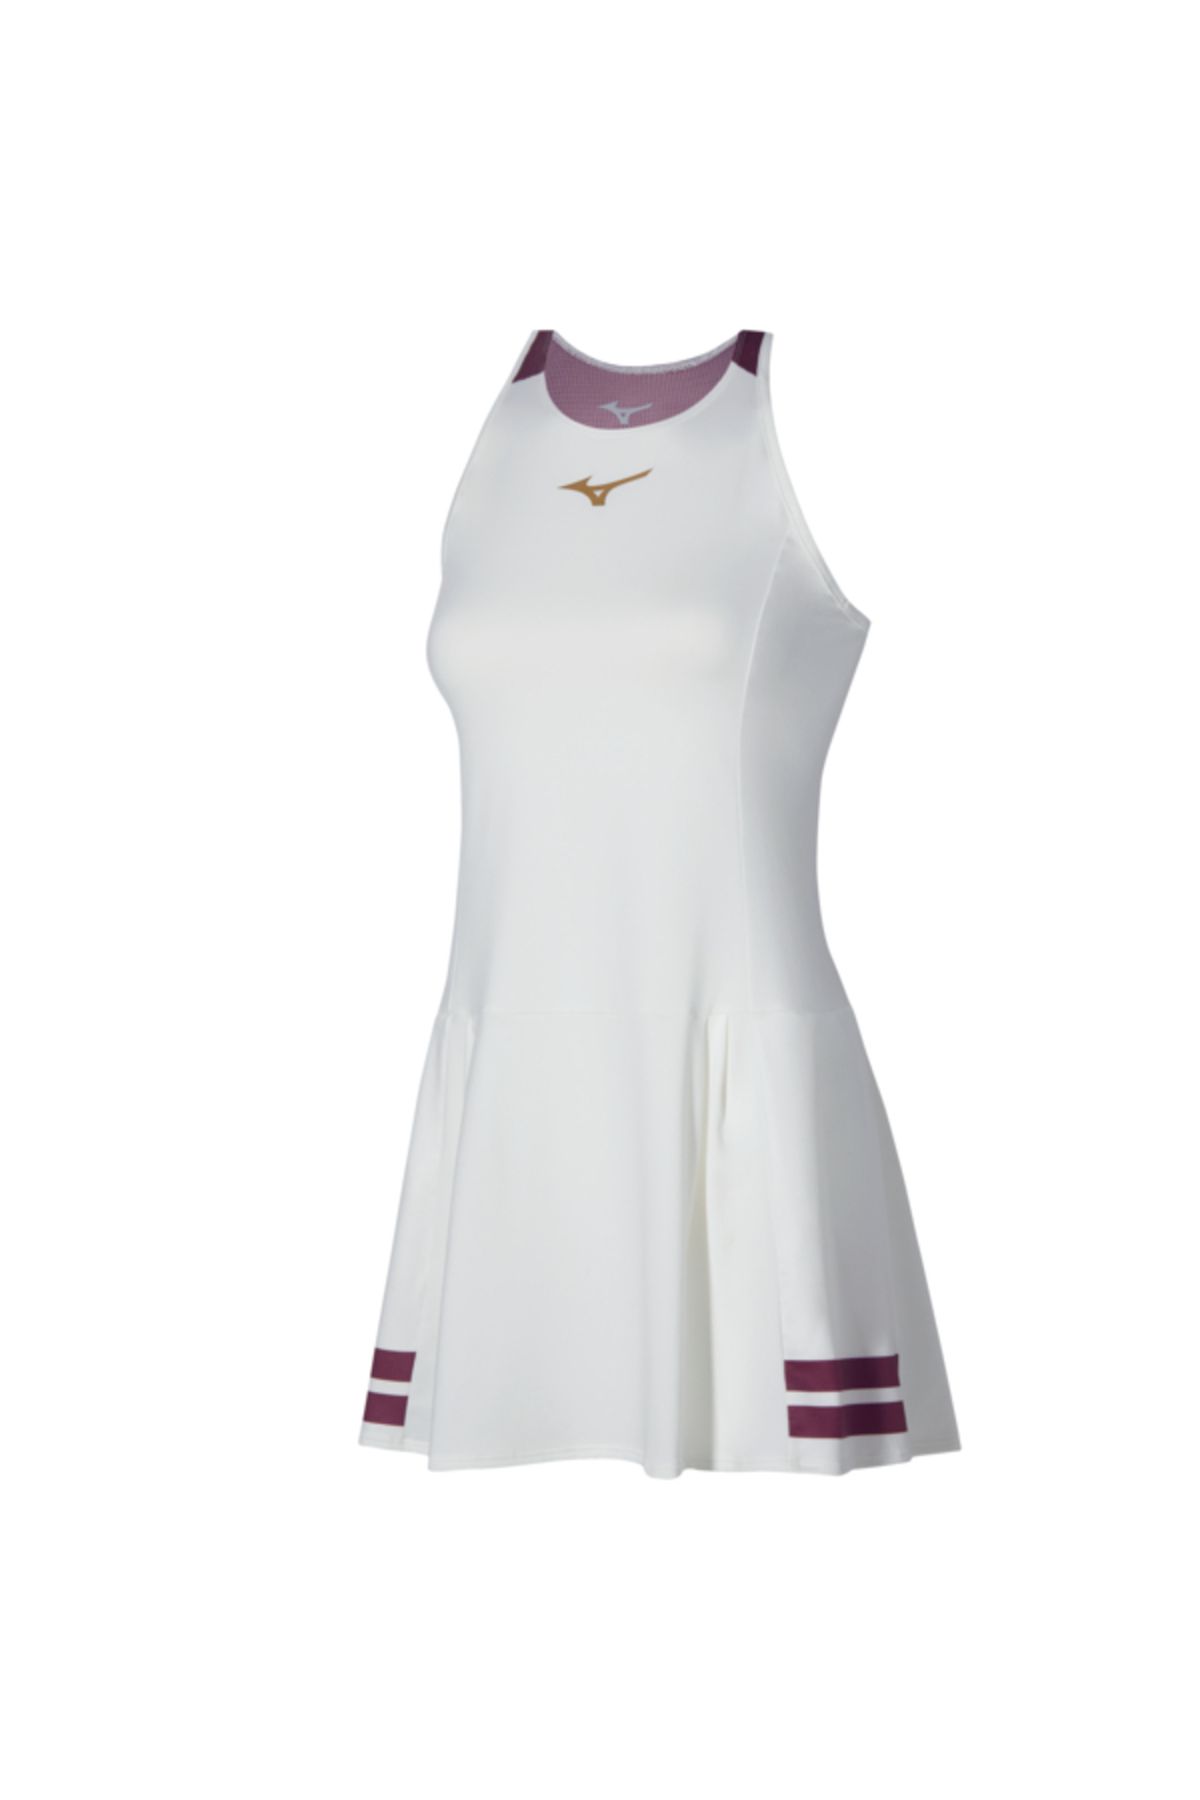 Mizuno Printed Dress Kadın Tenis Elbisesi Beyaz